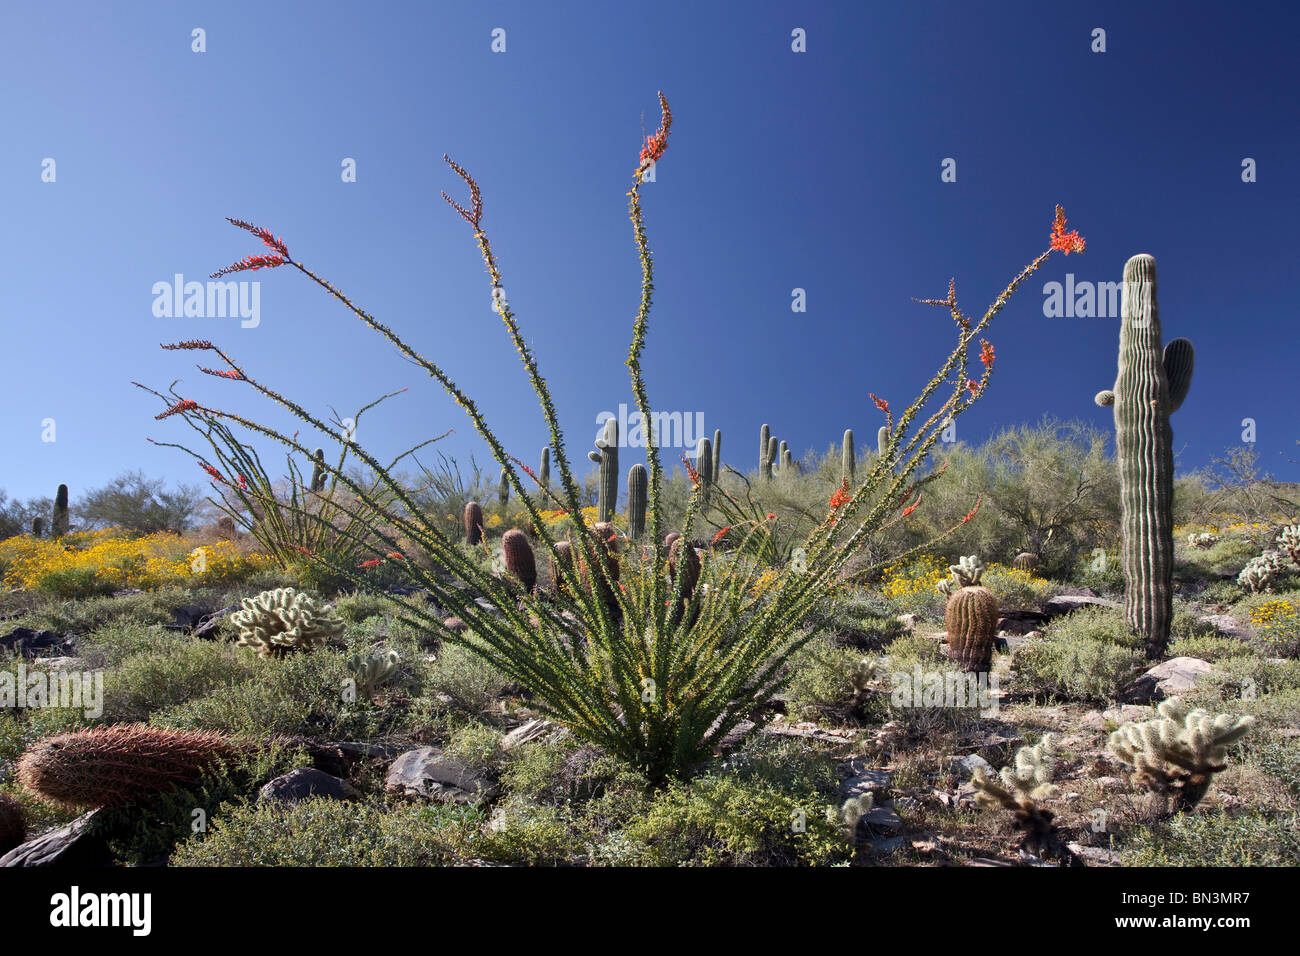 Cactuses in the Sonoran Desert, Arizona, USA Stock Photo